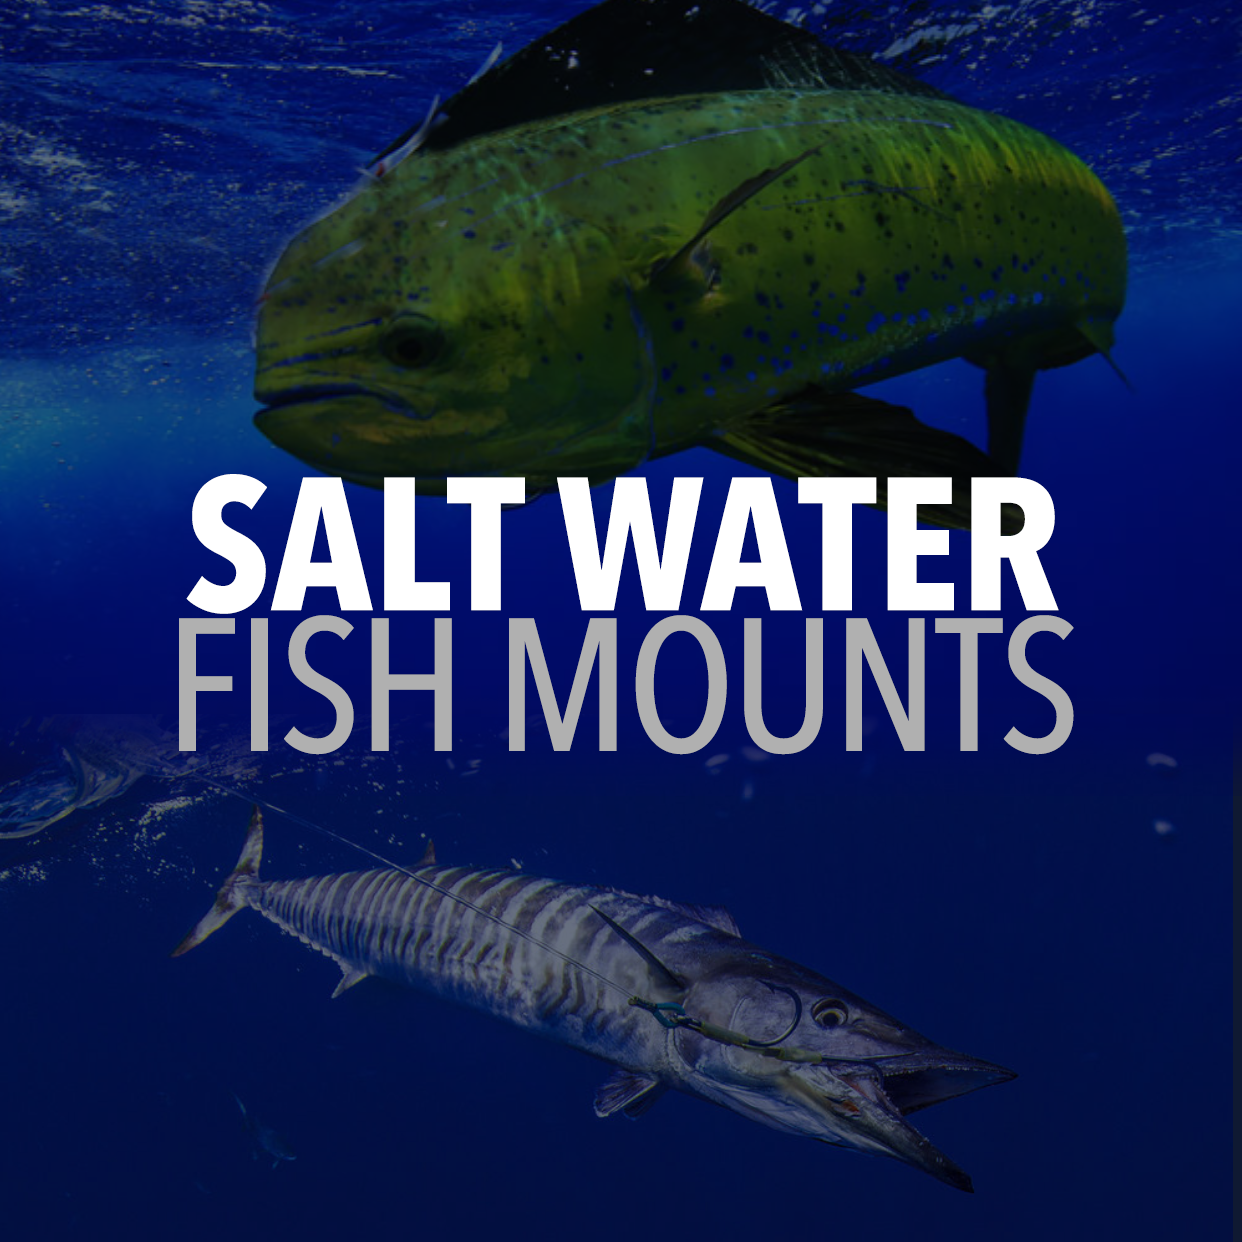 Saltwater Fish graphic